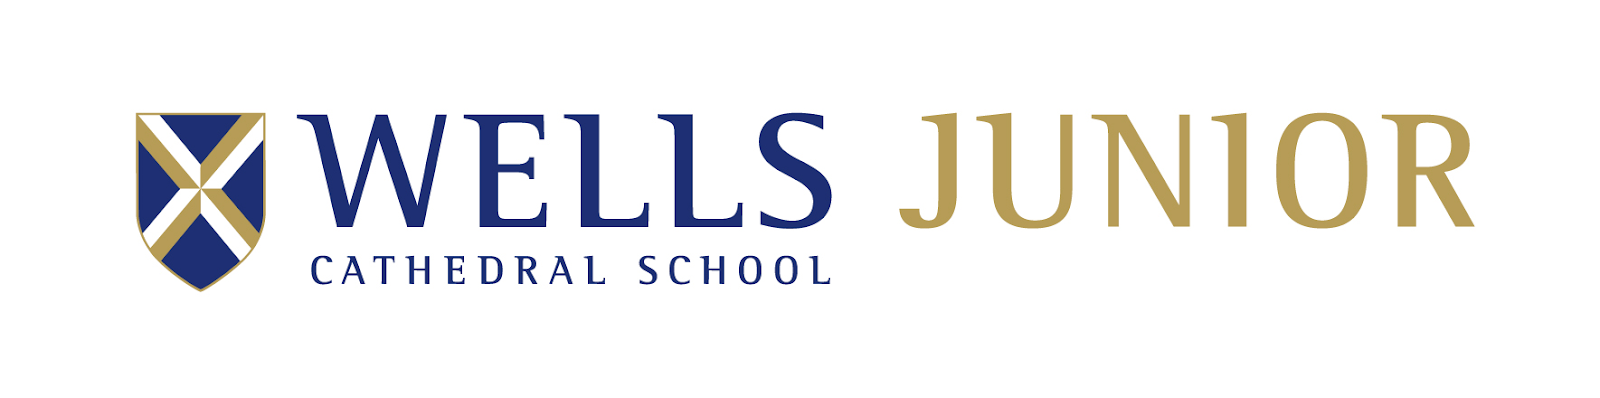 Wells Cathedral School Logo